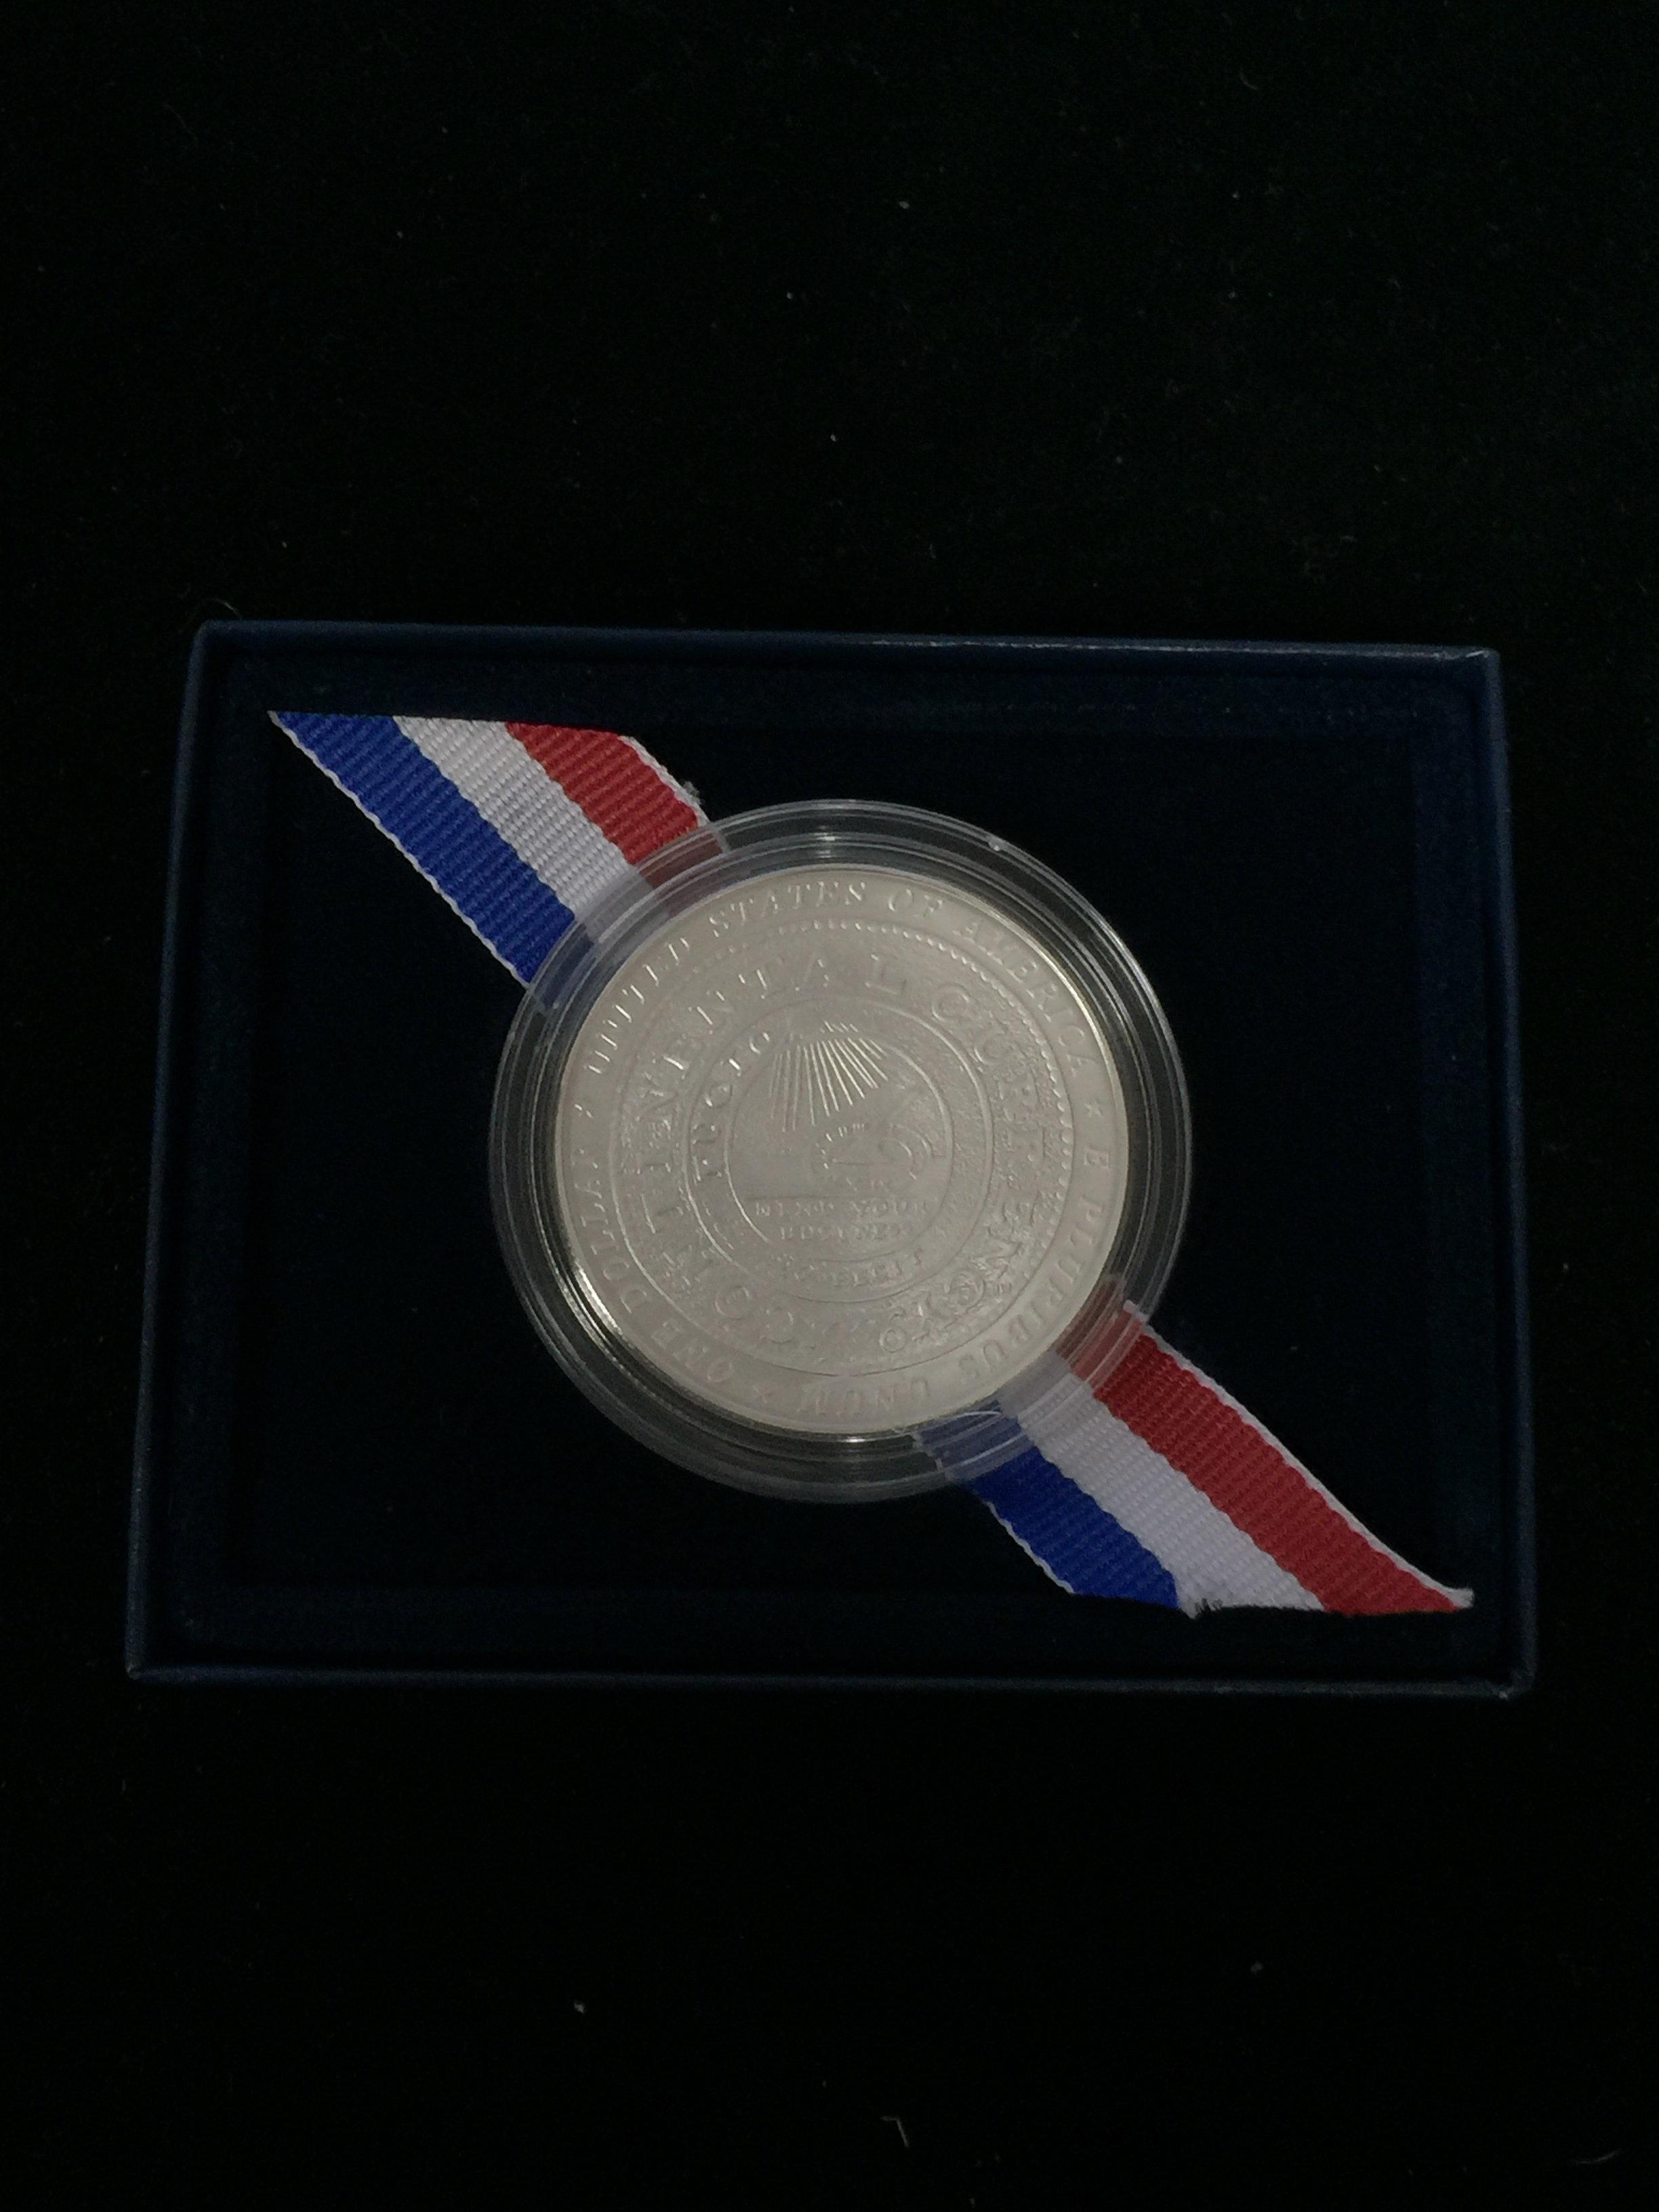 United States Mint 2006 Benjamin Franklin 90% Silver Dollar Commemorative Coin